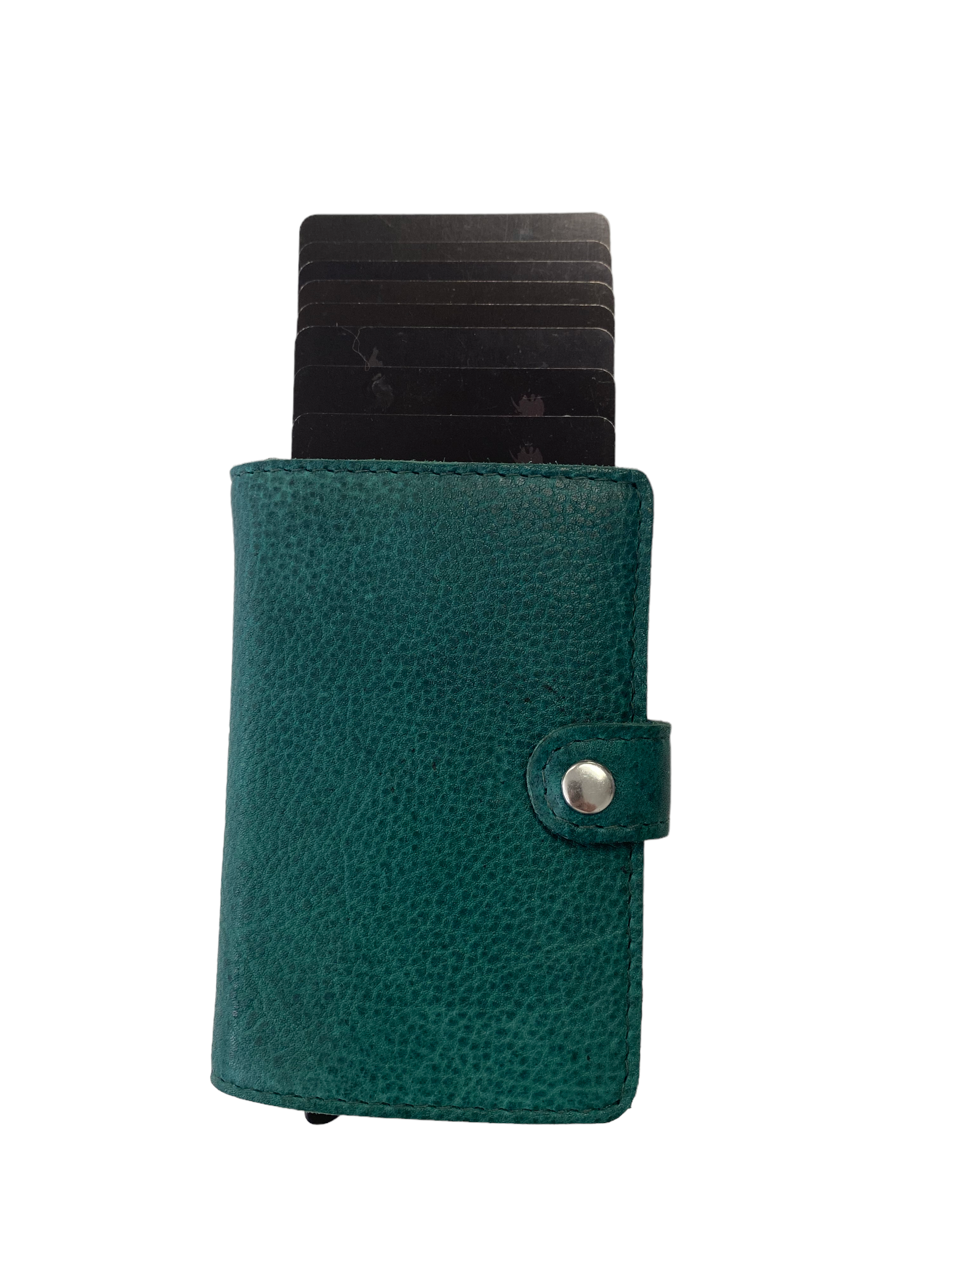 Oran - DL-02 Leather Spring load 8 card wallet - Green